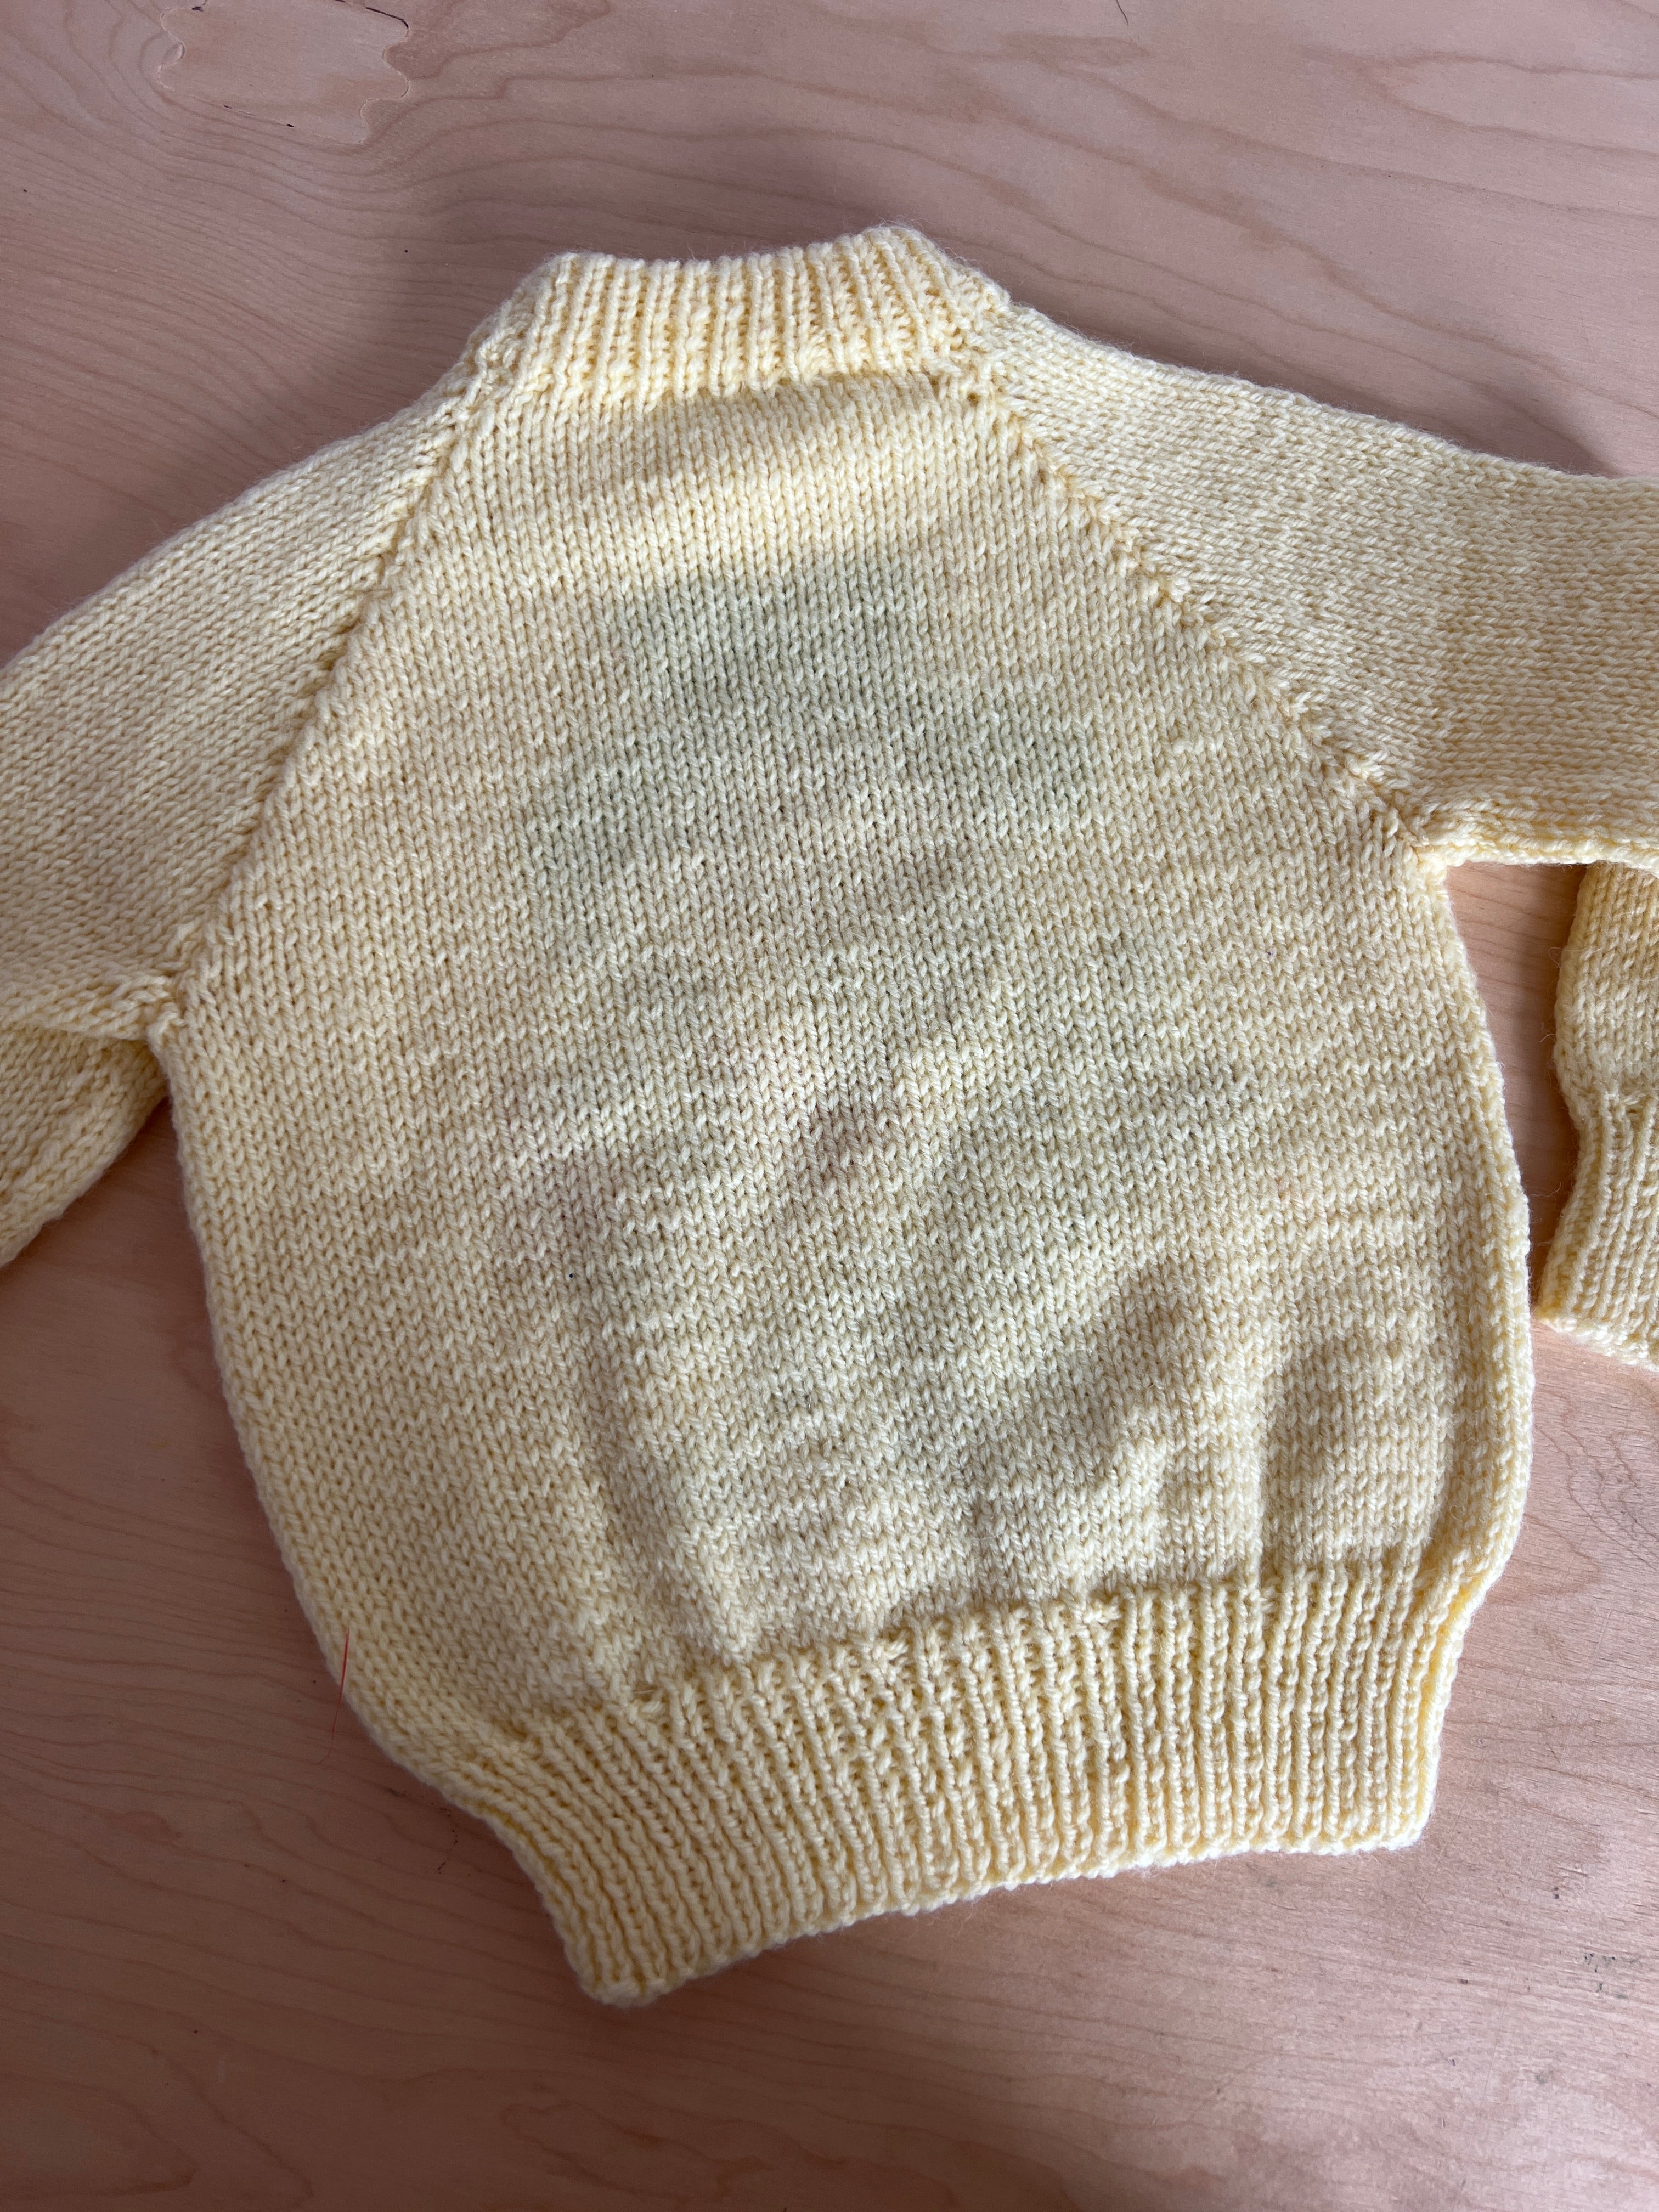 6-12 months | Hand Knit